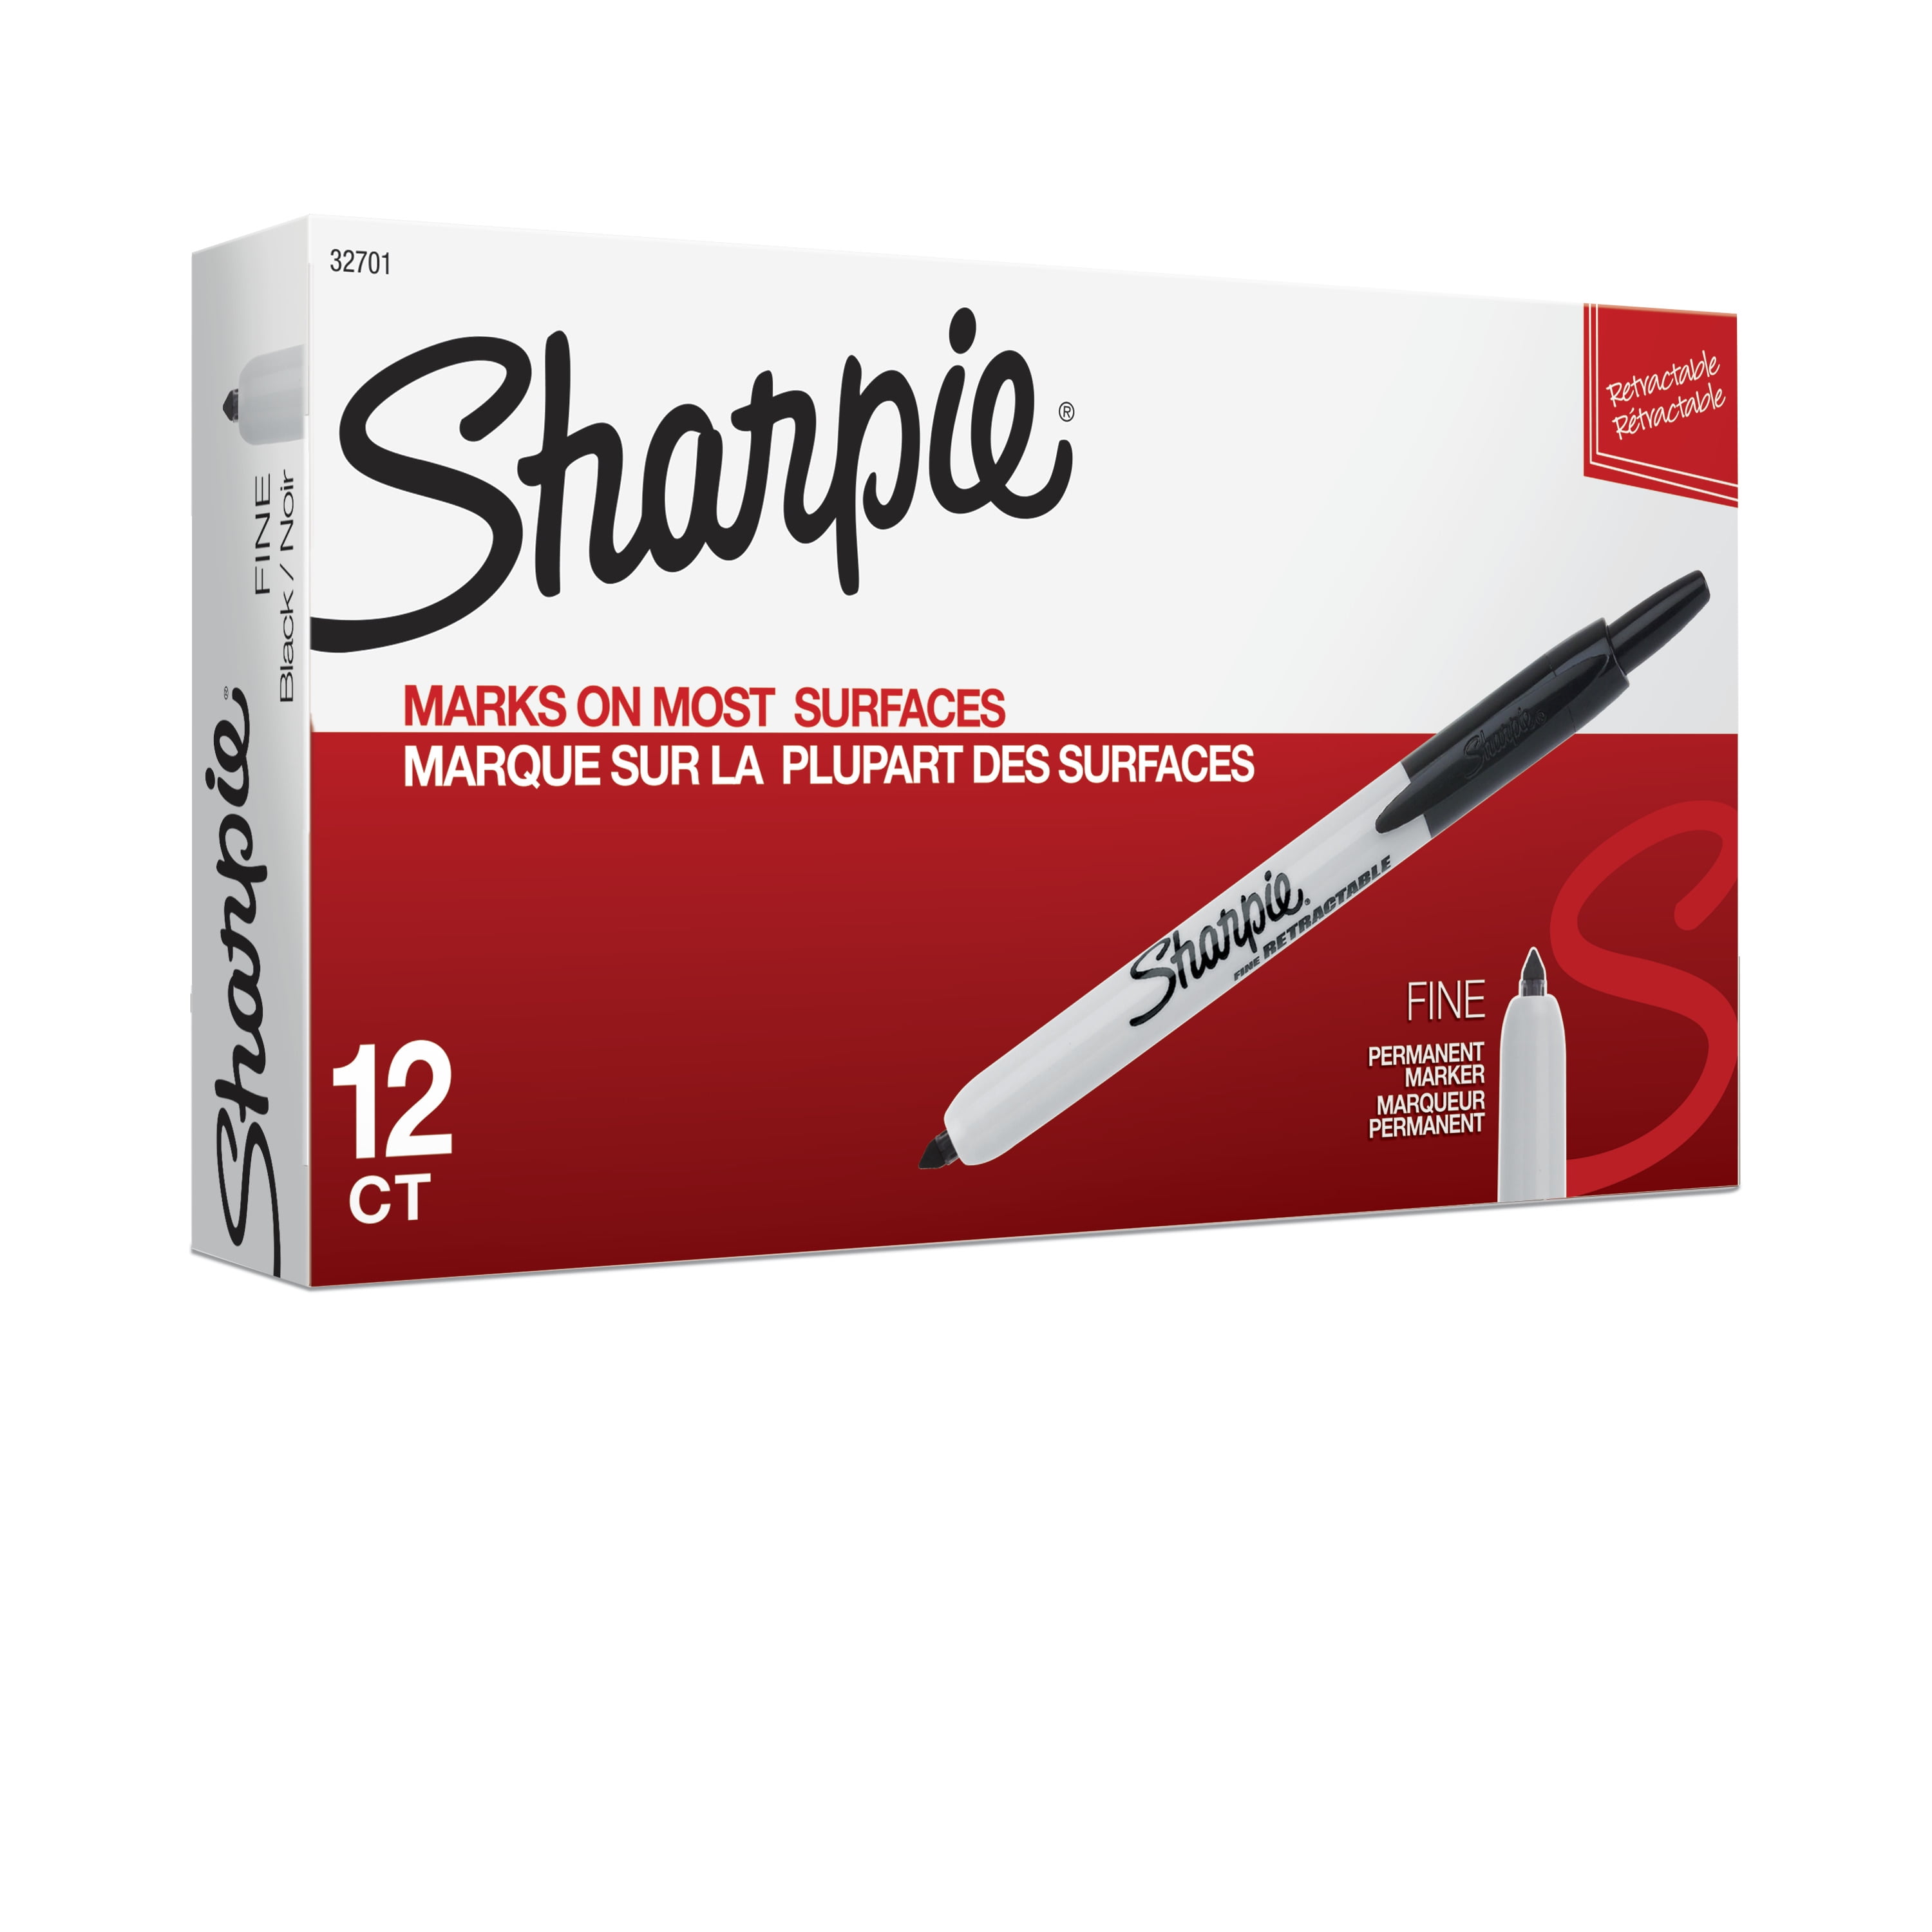 Sanford Sharpie Retractable Ultra Fine Tip Carded 3Pk Black